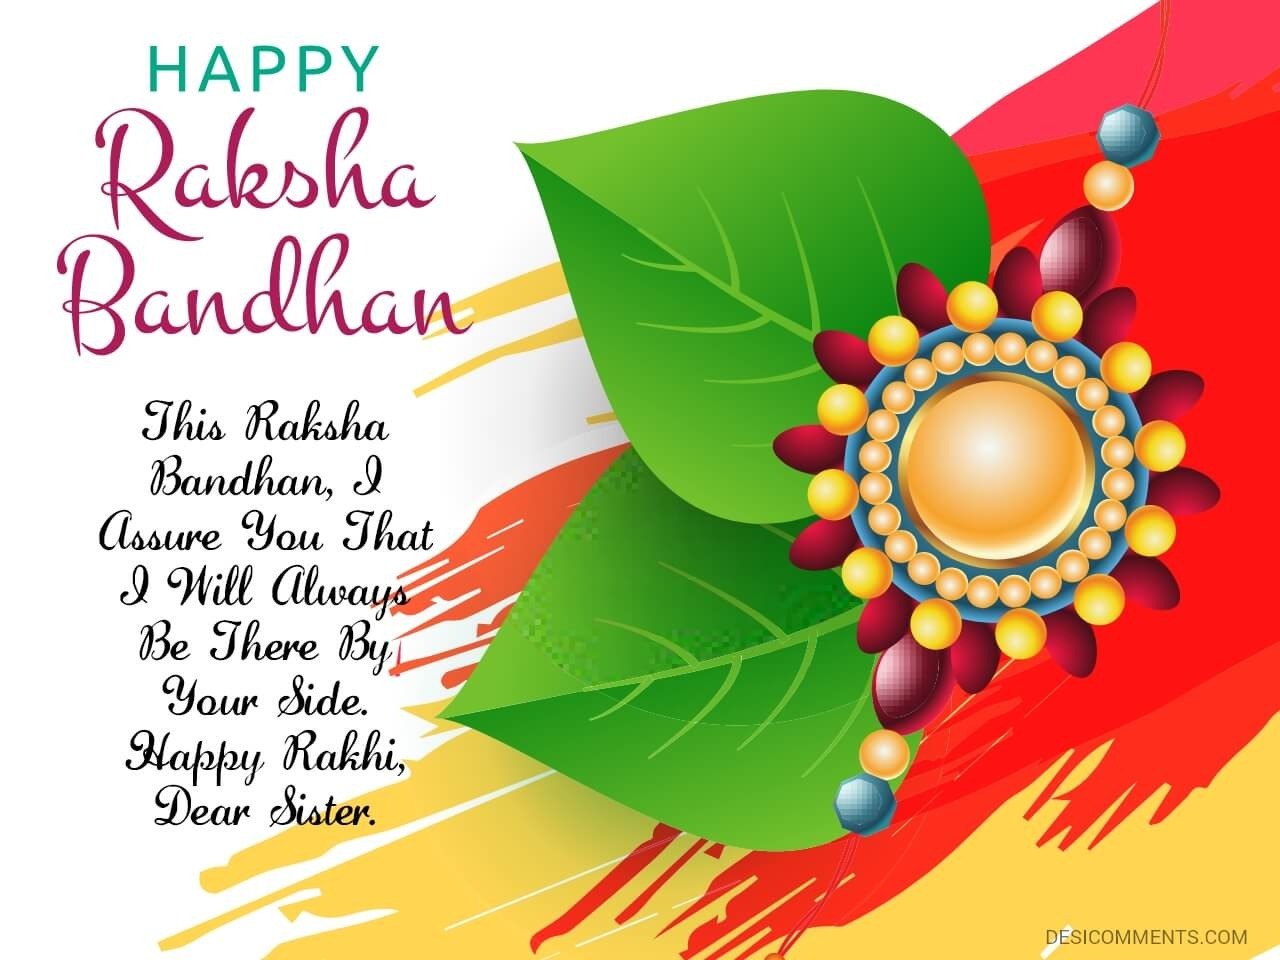 Happy Raksha Bandhan - DesiComments.com